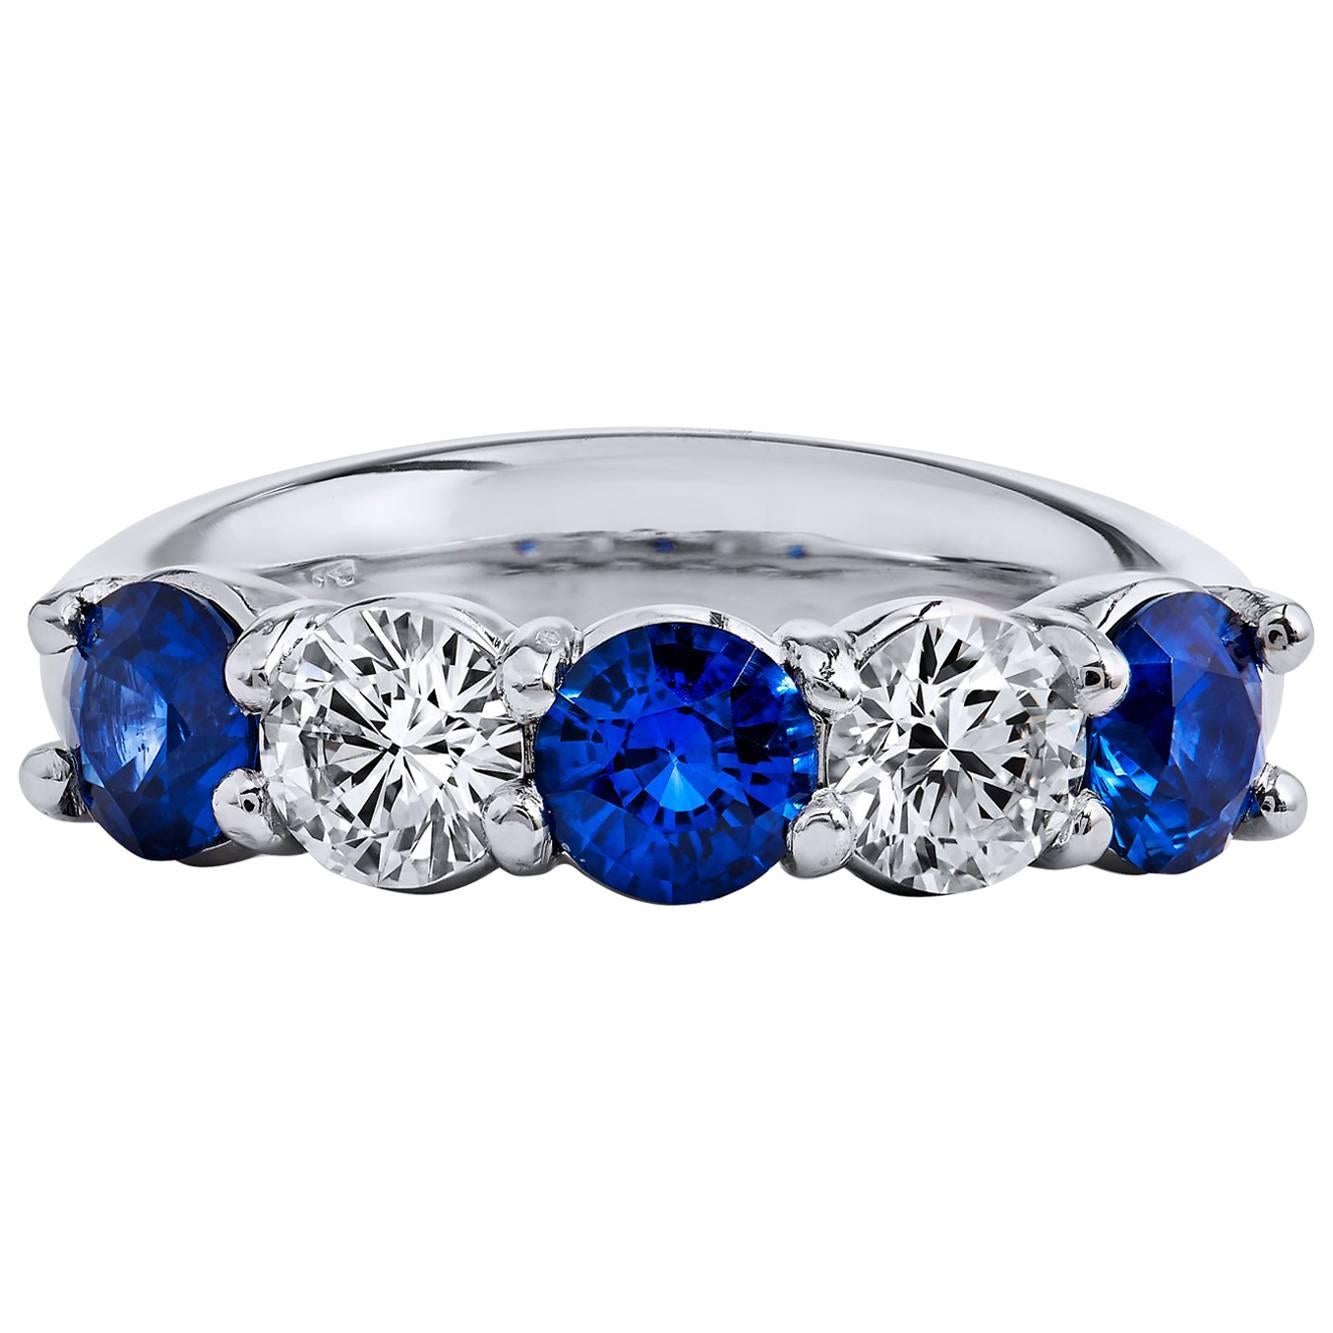 H & H 1.48 Carat Blue Sapphire and 0.70 Carat Diamond Band Ring